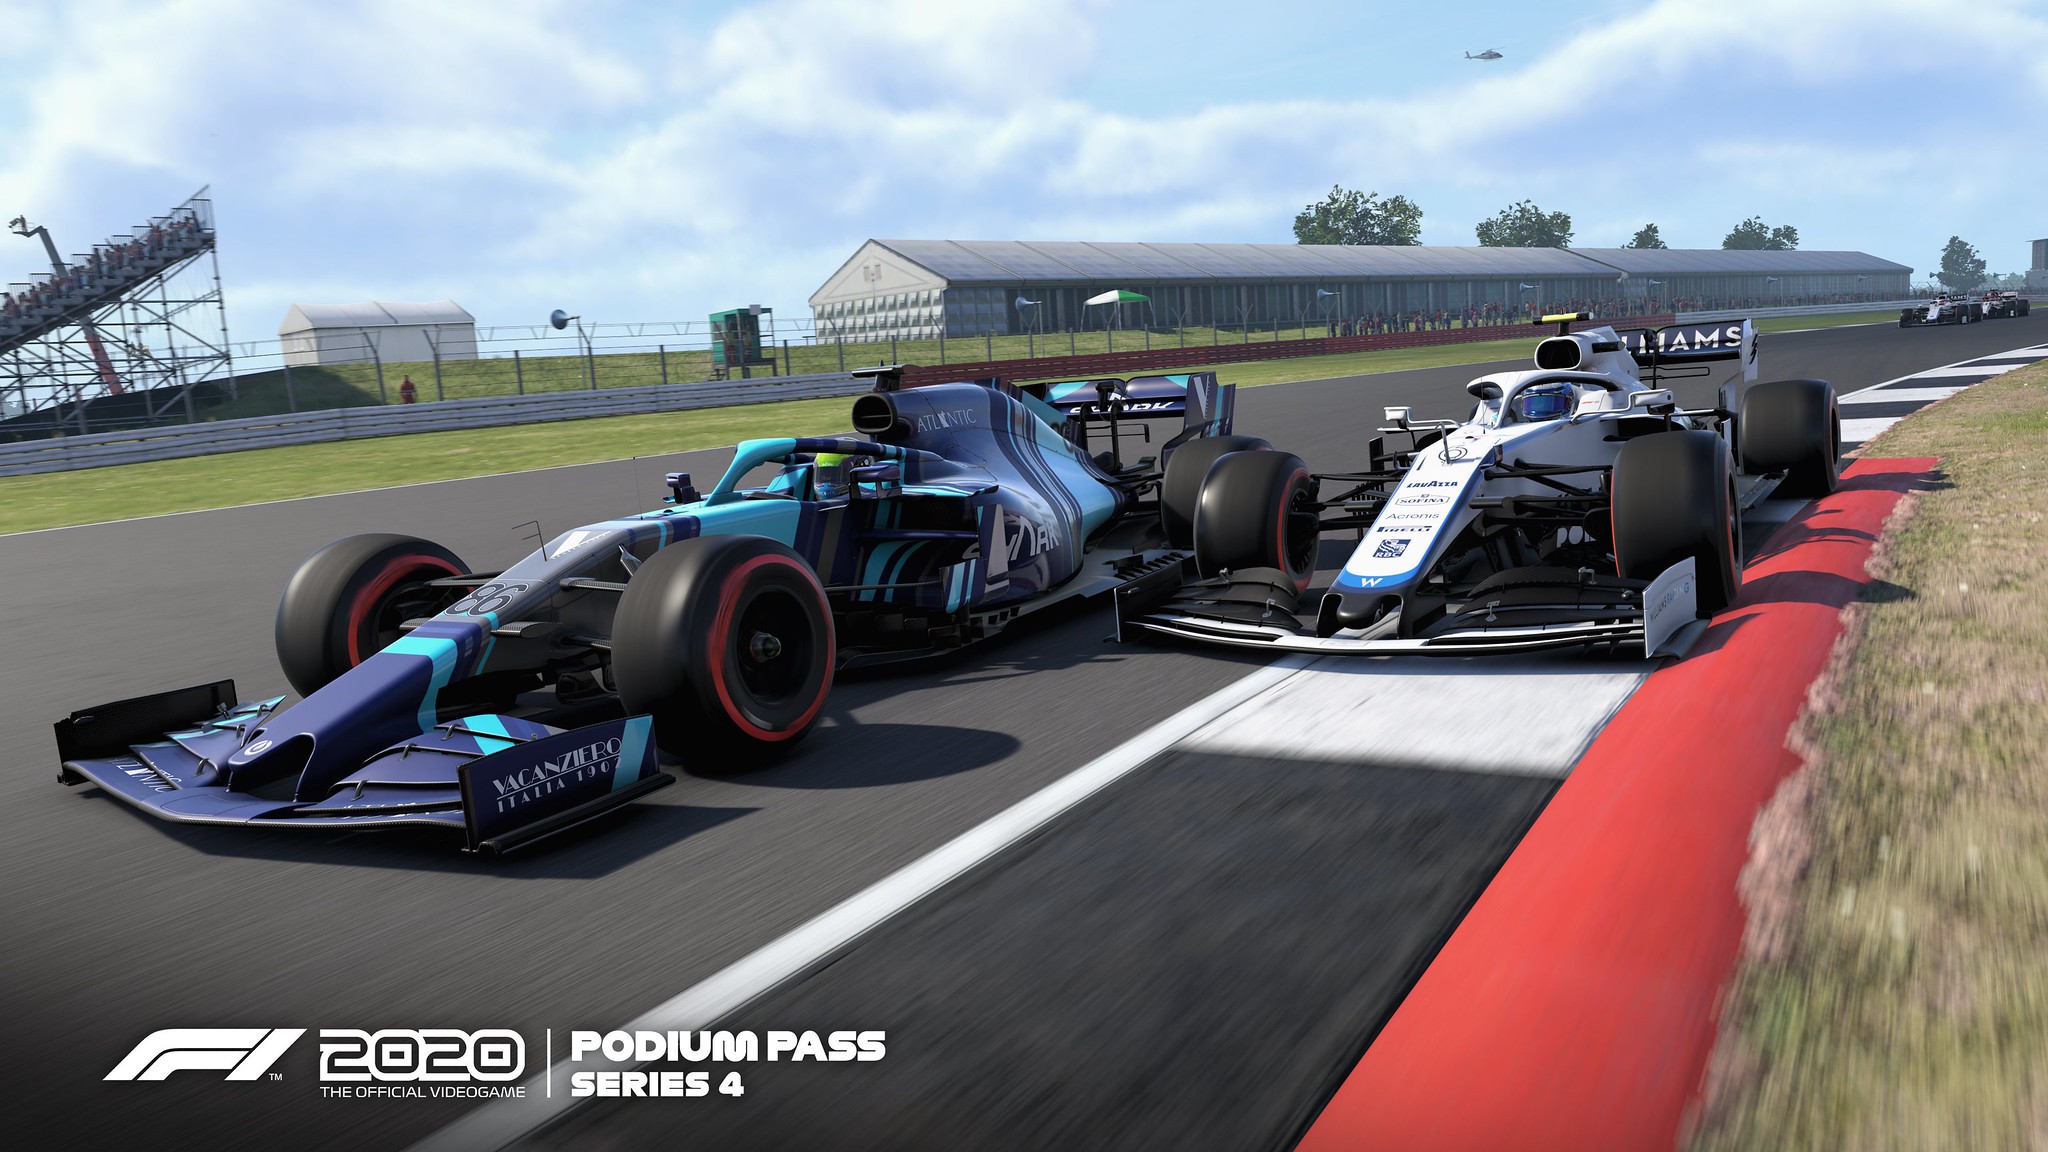 F1 2020 - Podium Pass Series 4 Available - Bsimracing